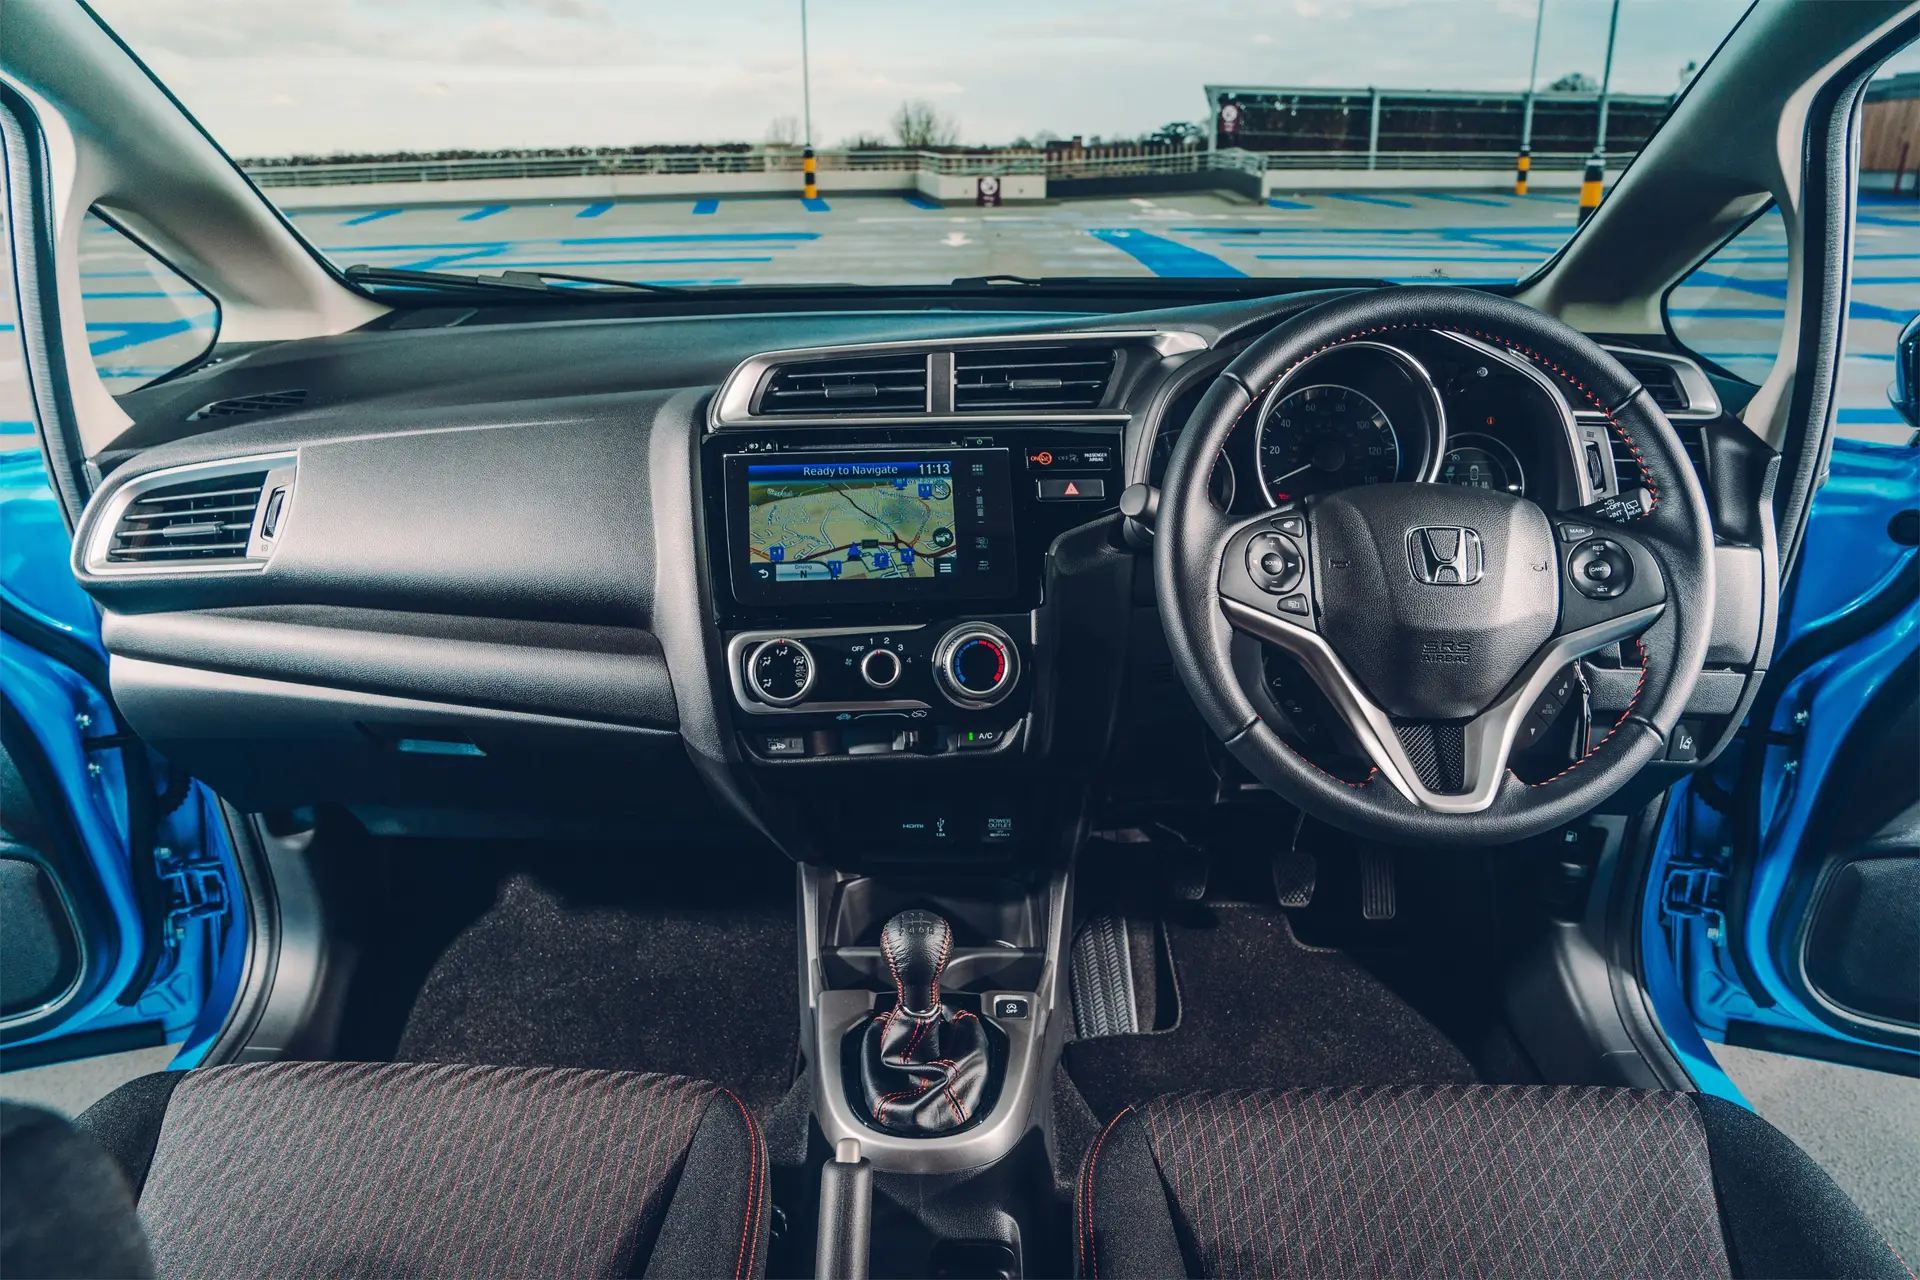 Honda Jazz (2015-2020) Review: interior close up photo of the Honda Jazz dashboard